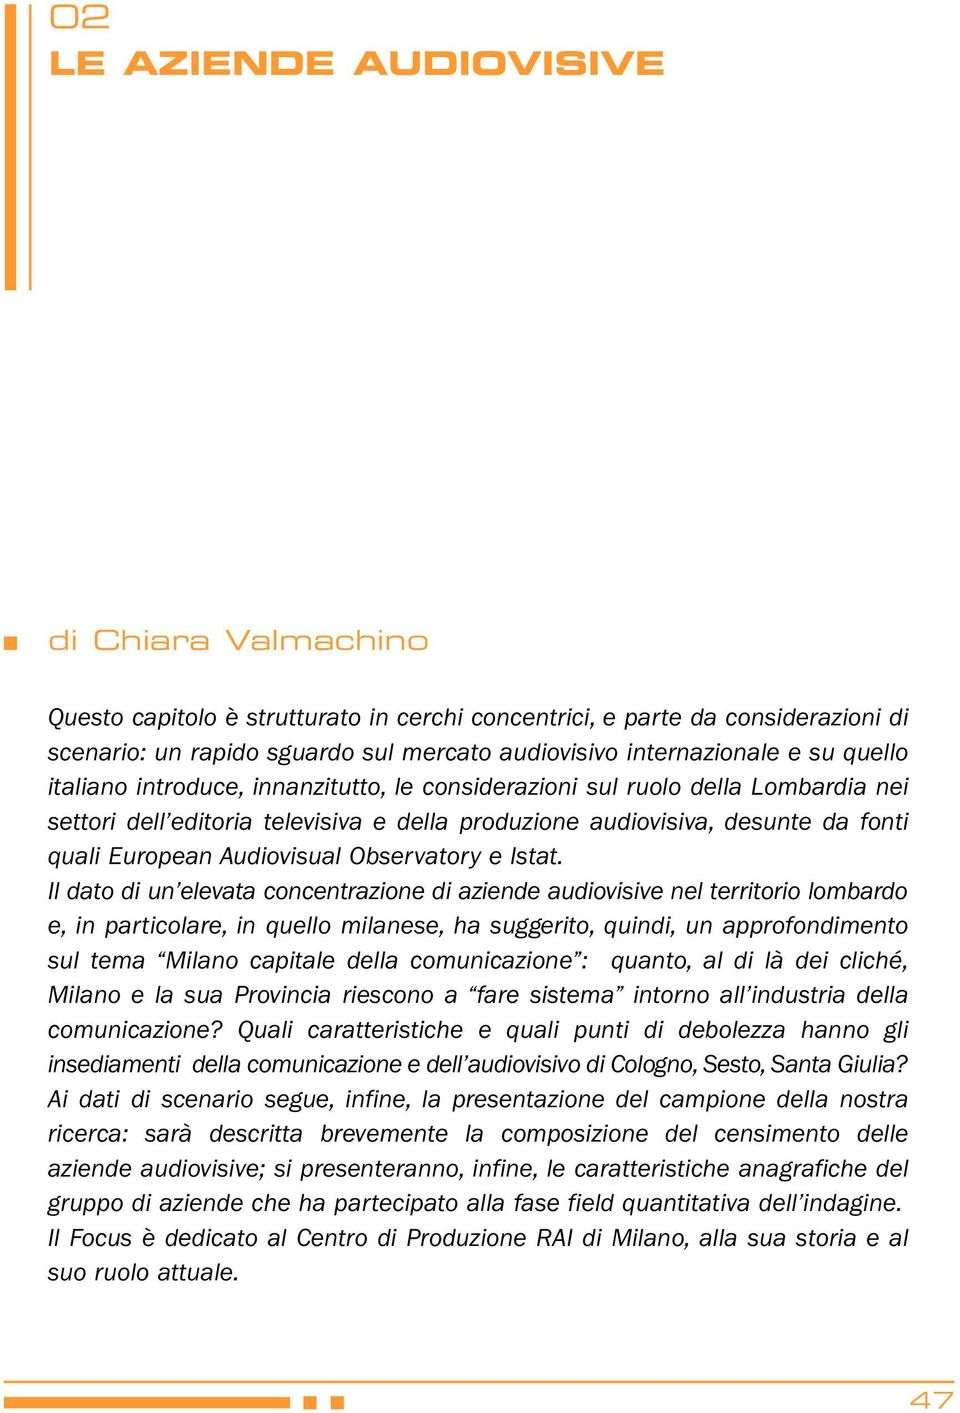 Audiovisual Observatory e Istat.